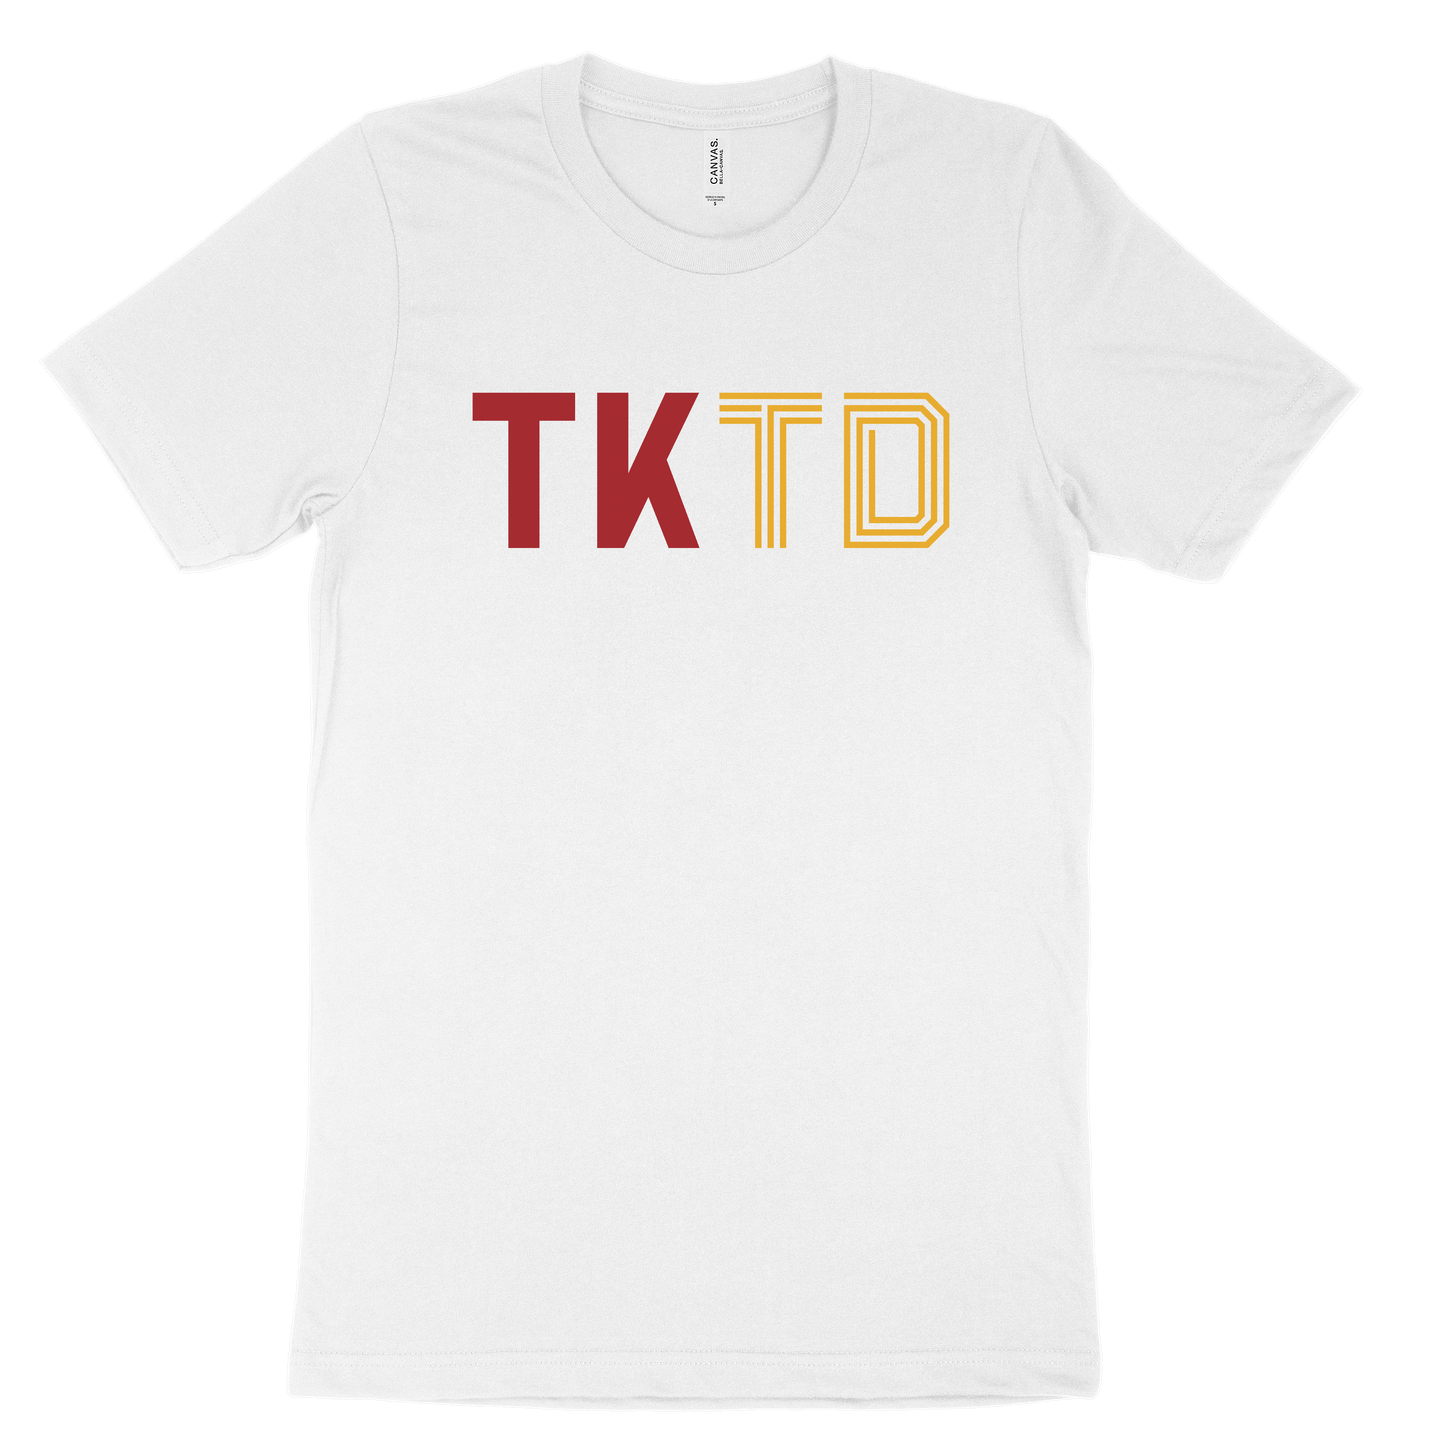 TKTD Tee - White Multi